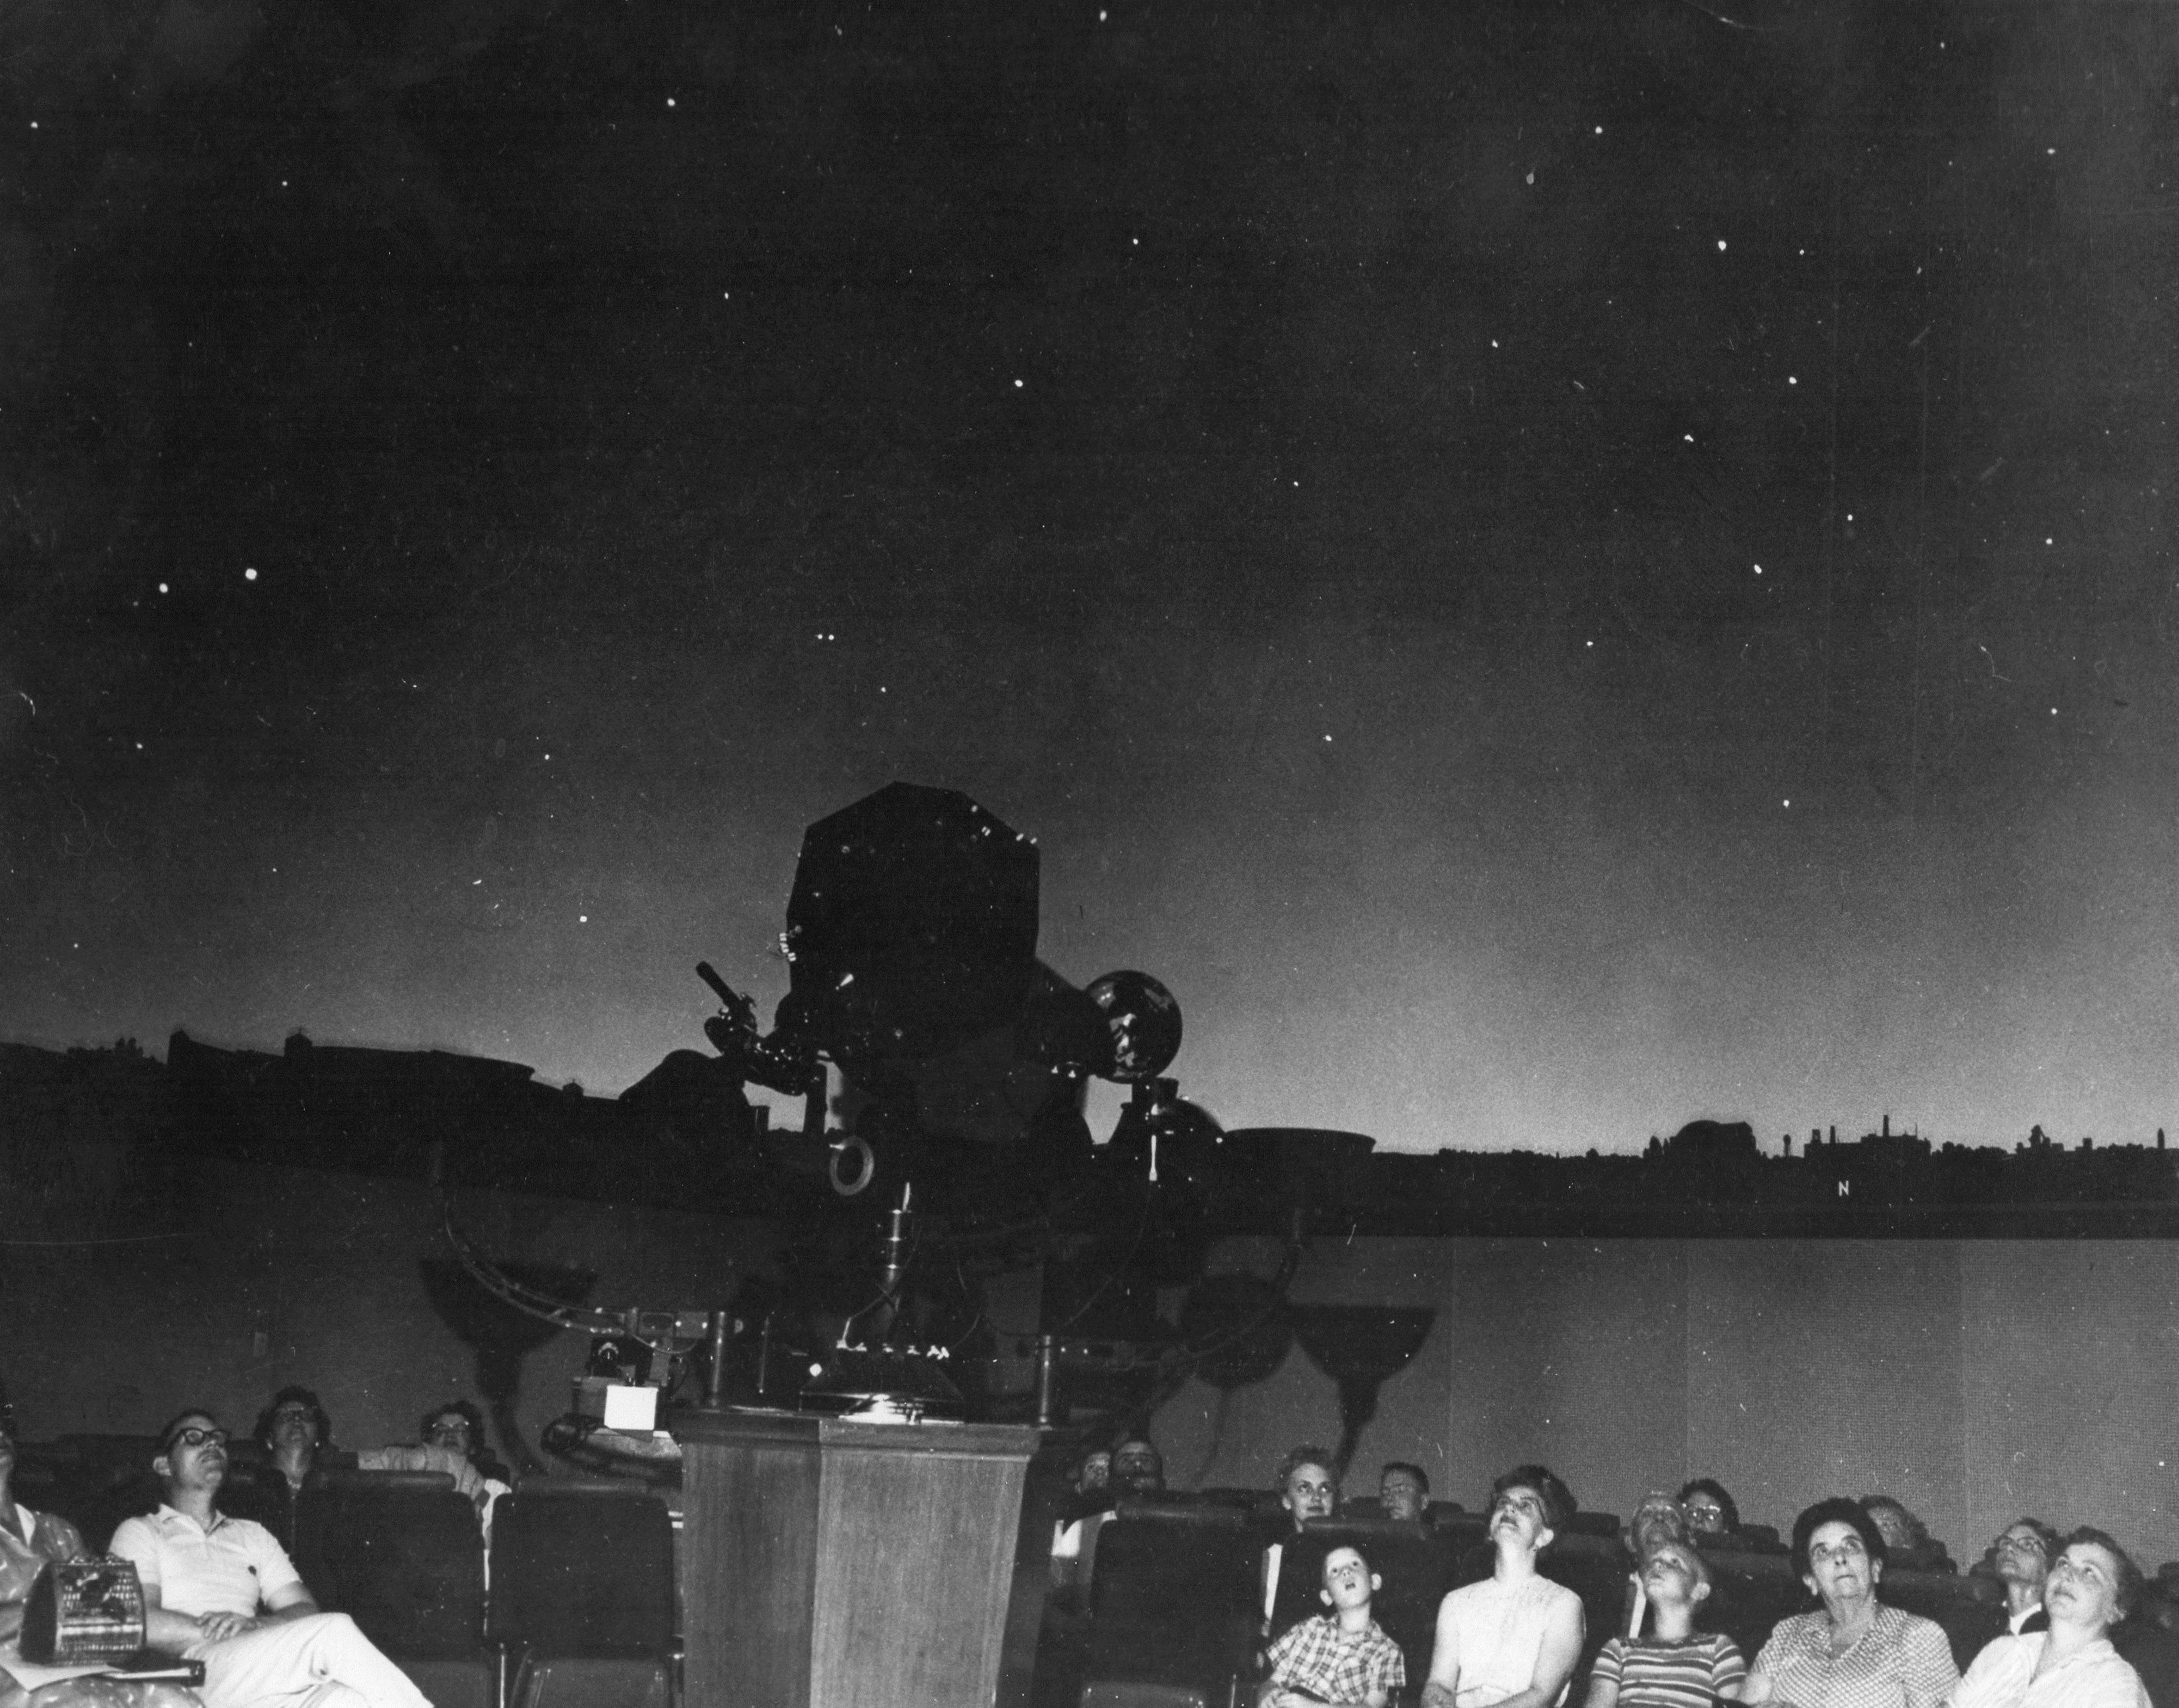 First star projector, Spitz A-2 (1958)